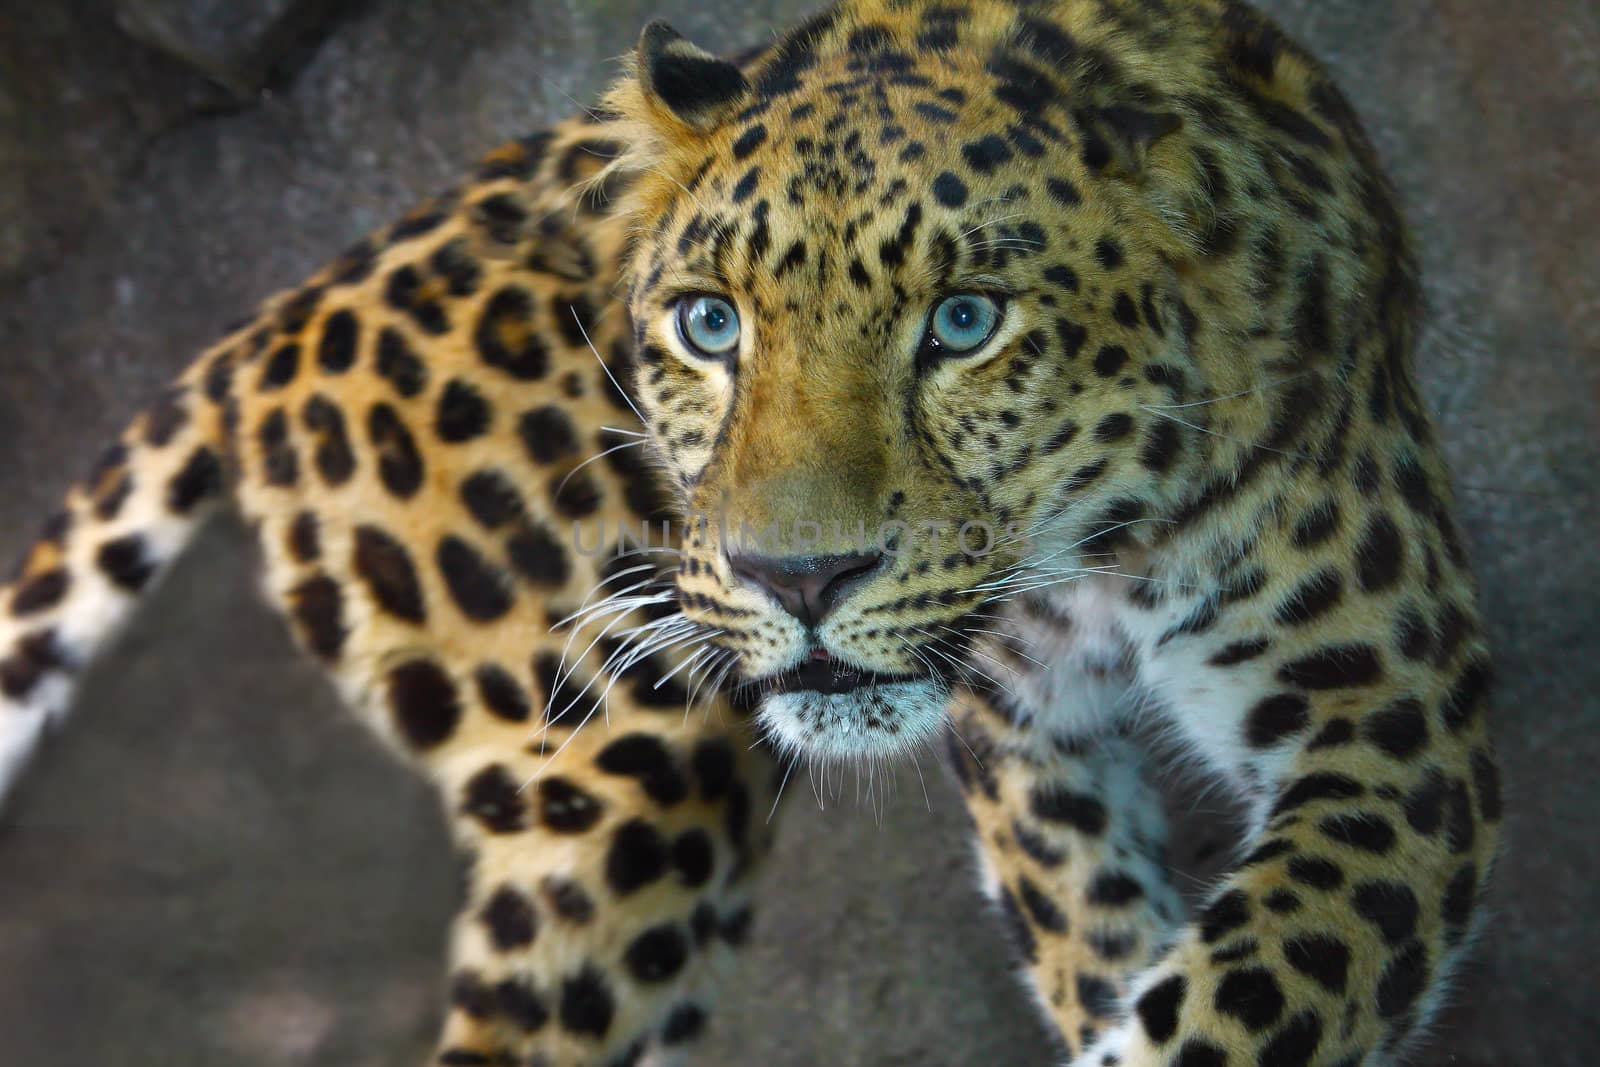 Amur Leopard on the prowl looking alert.